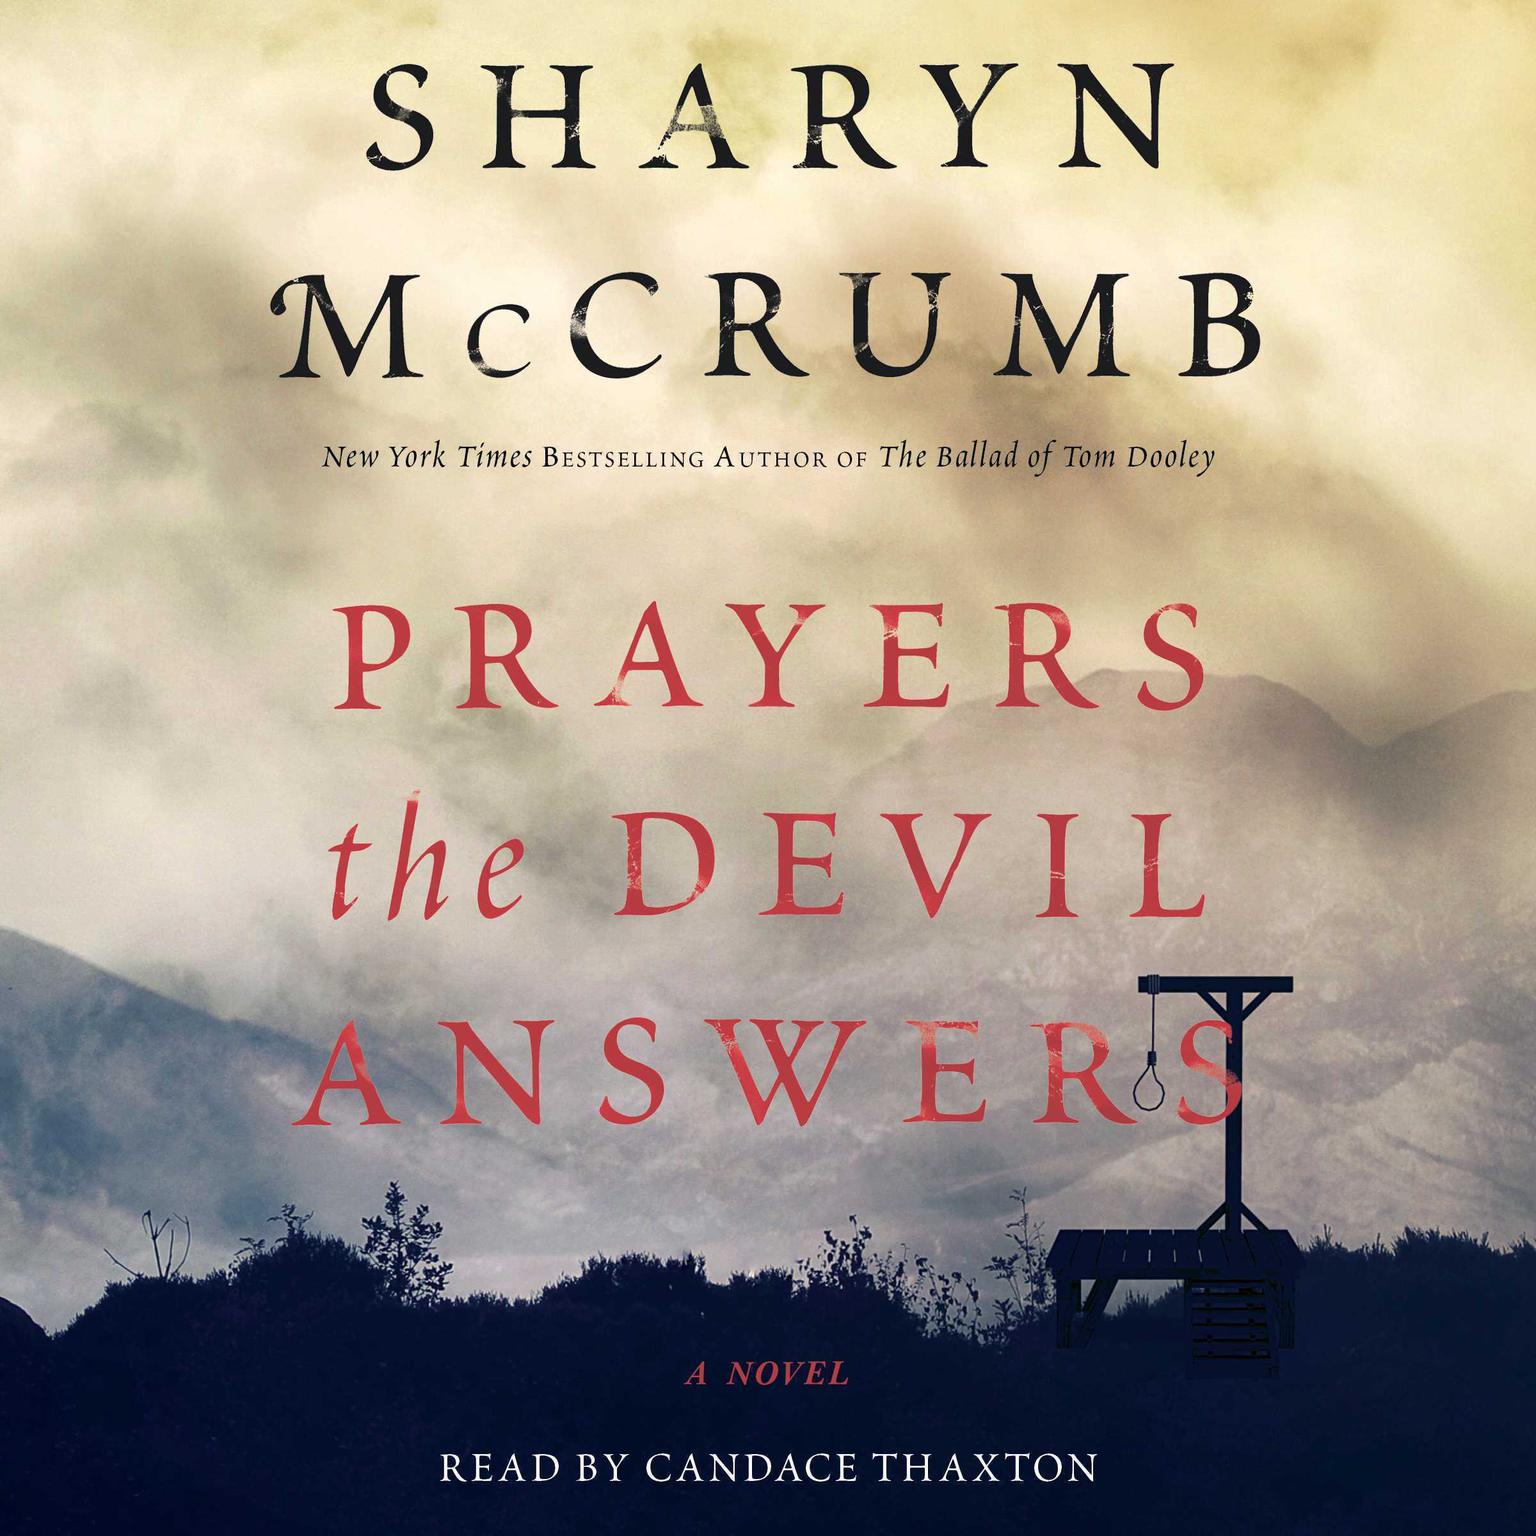 Prayers the Devil Answers: A Novel Audiobook, by Sharyn McCrumb